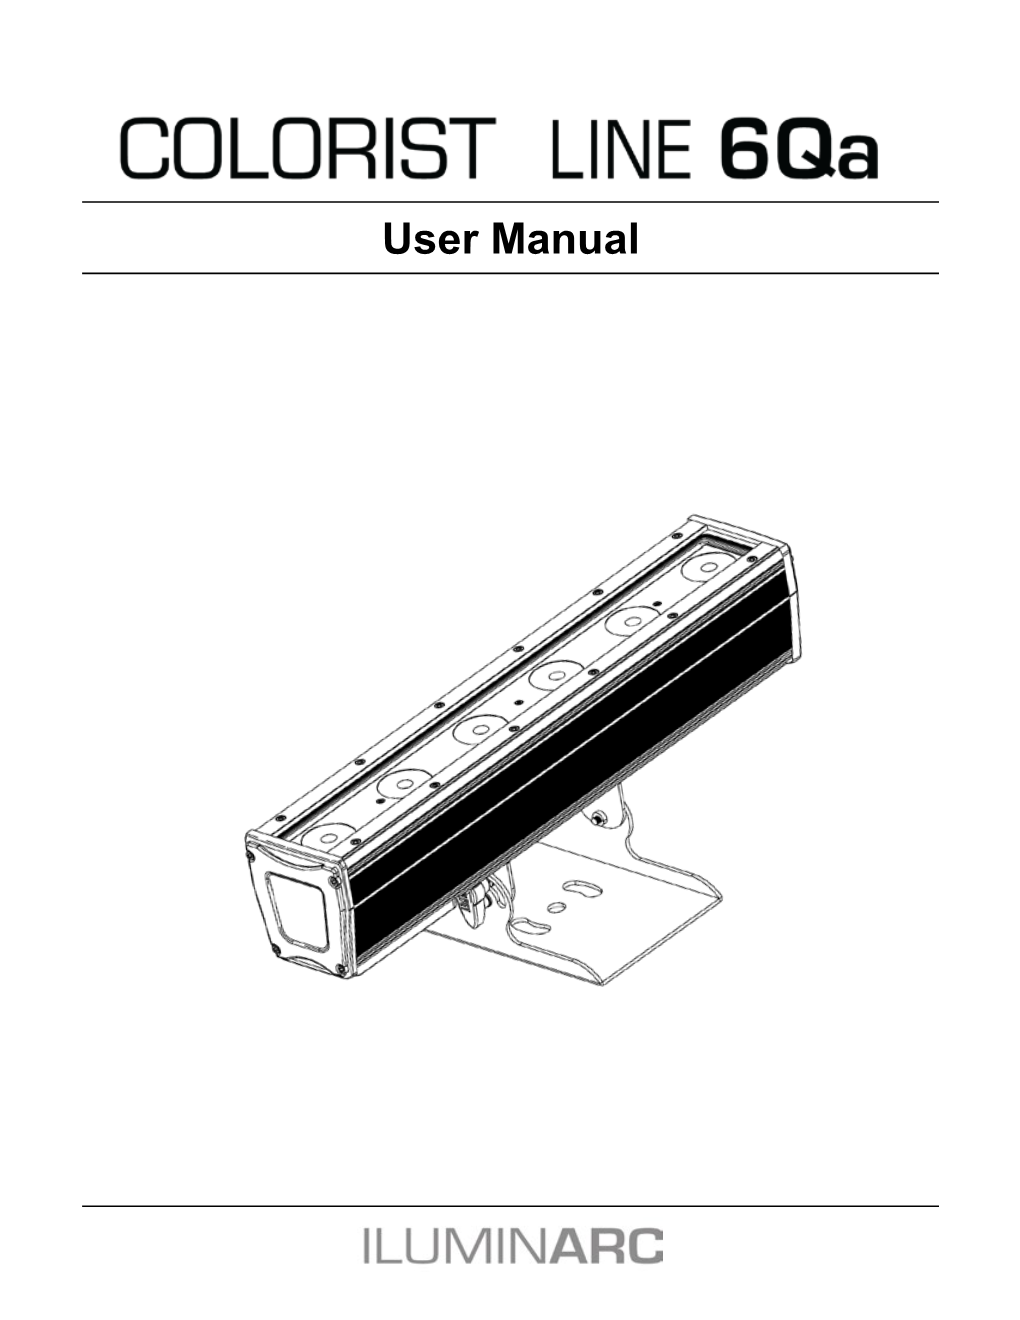 Colorist Line 6Qa User Manual Rev